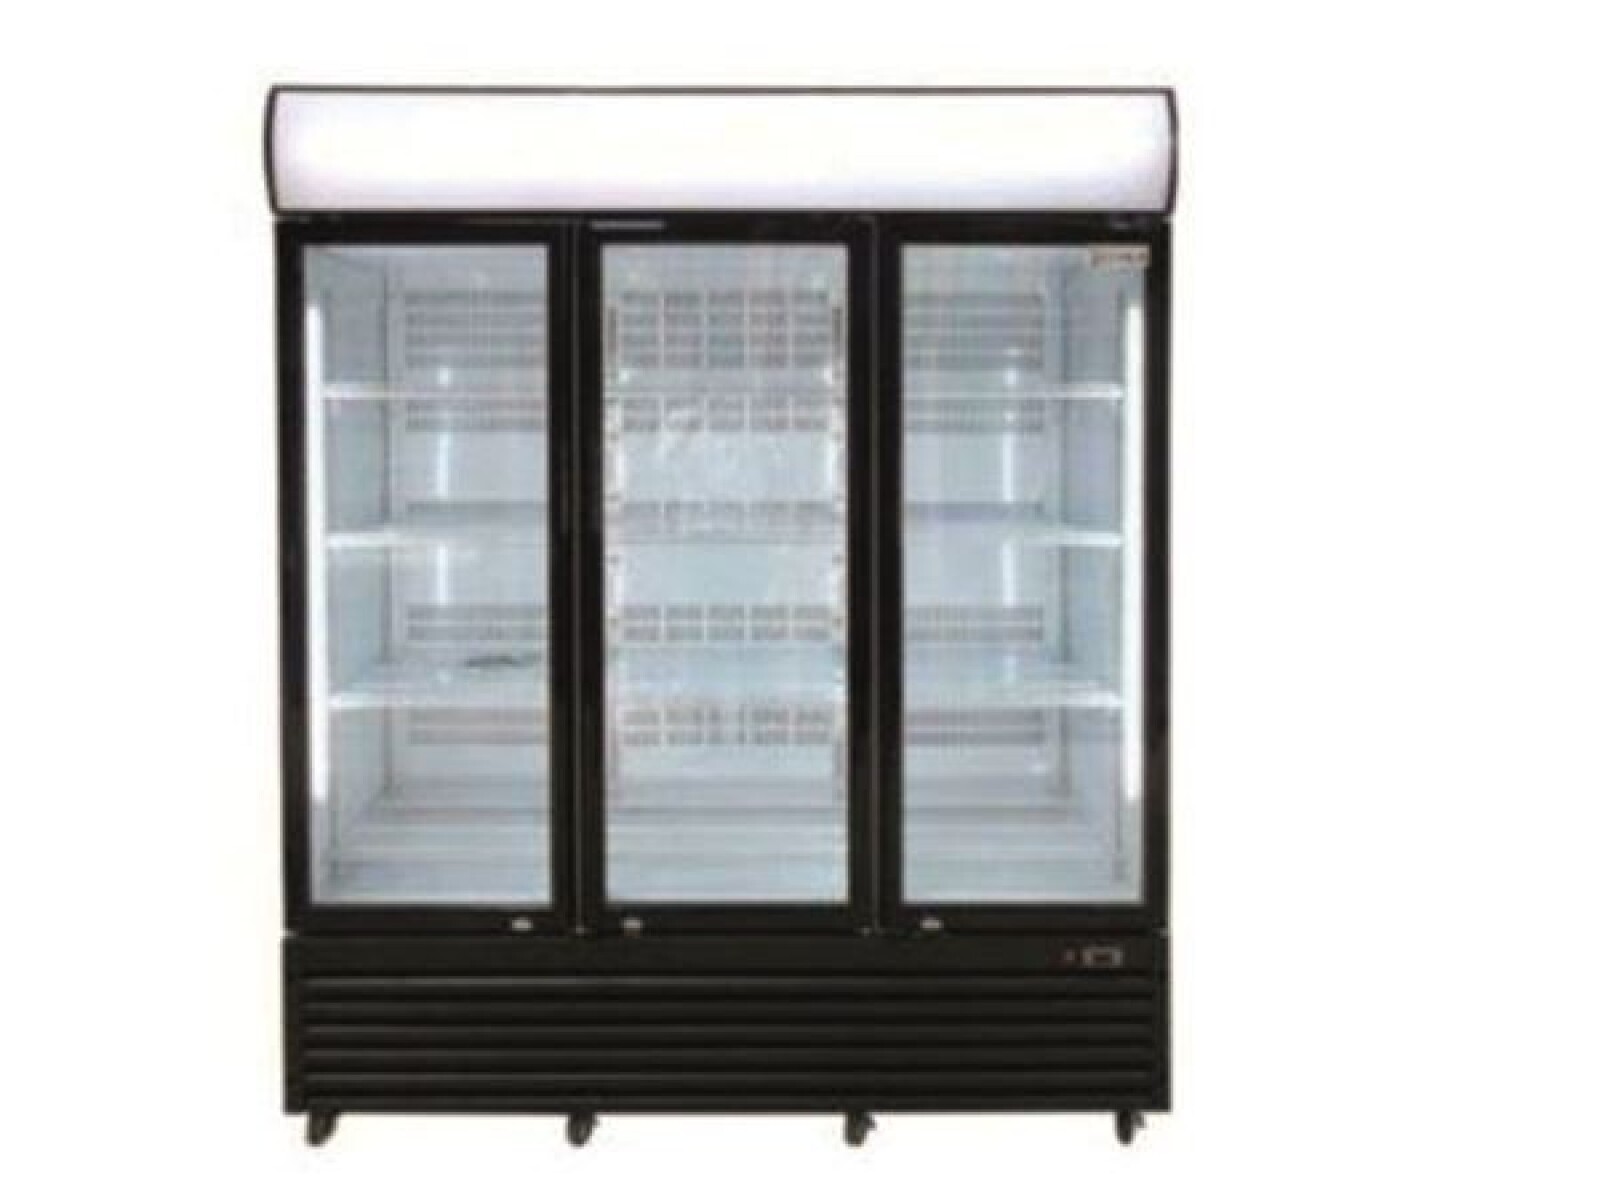 Expositor vertical refrigerado 3 puerta 1200 lts Iccold 